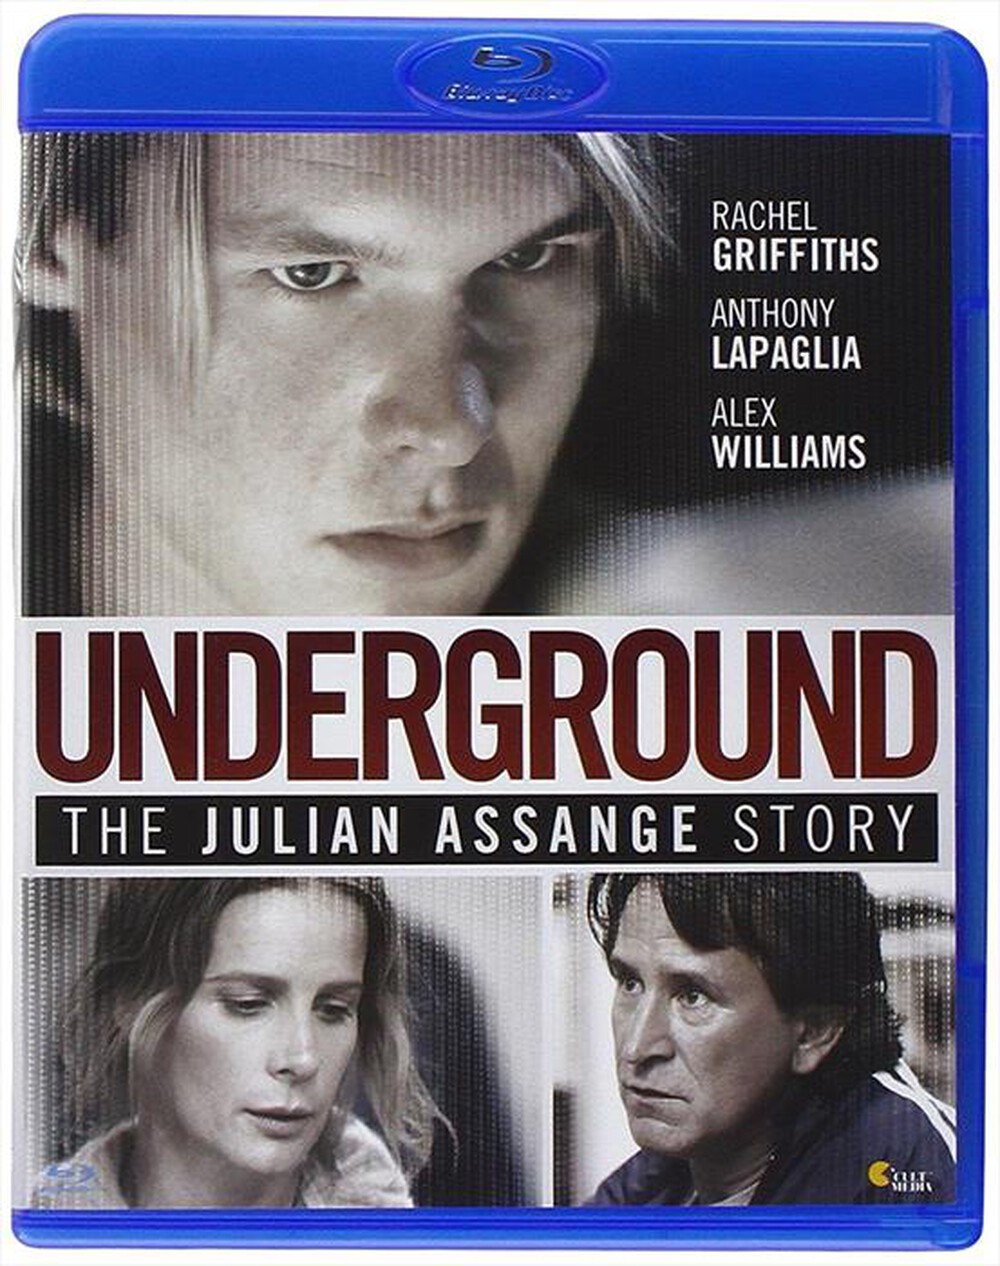 "CULT MEDIA - Underground - The Julian Assange Story"